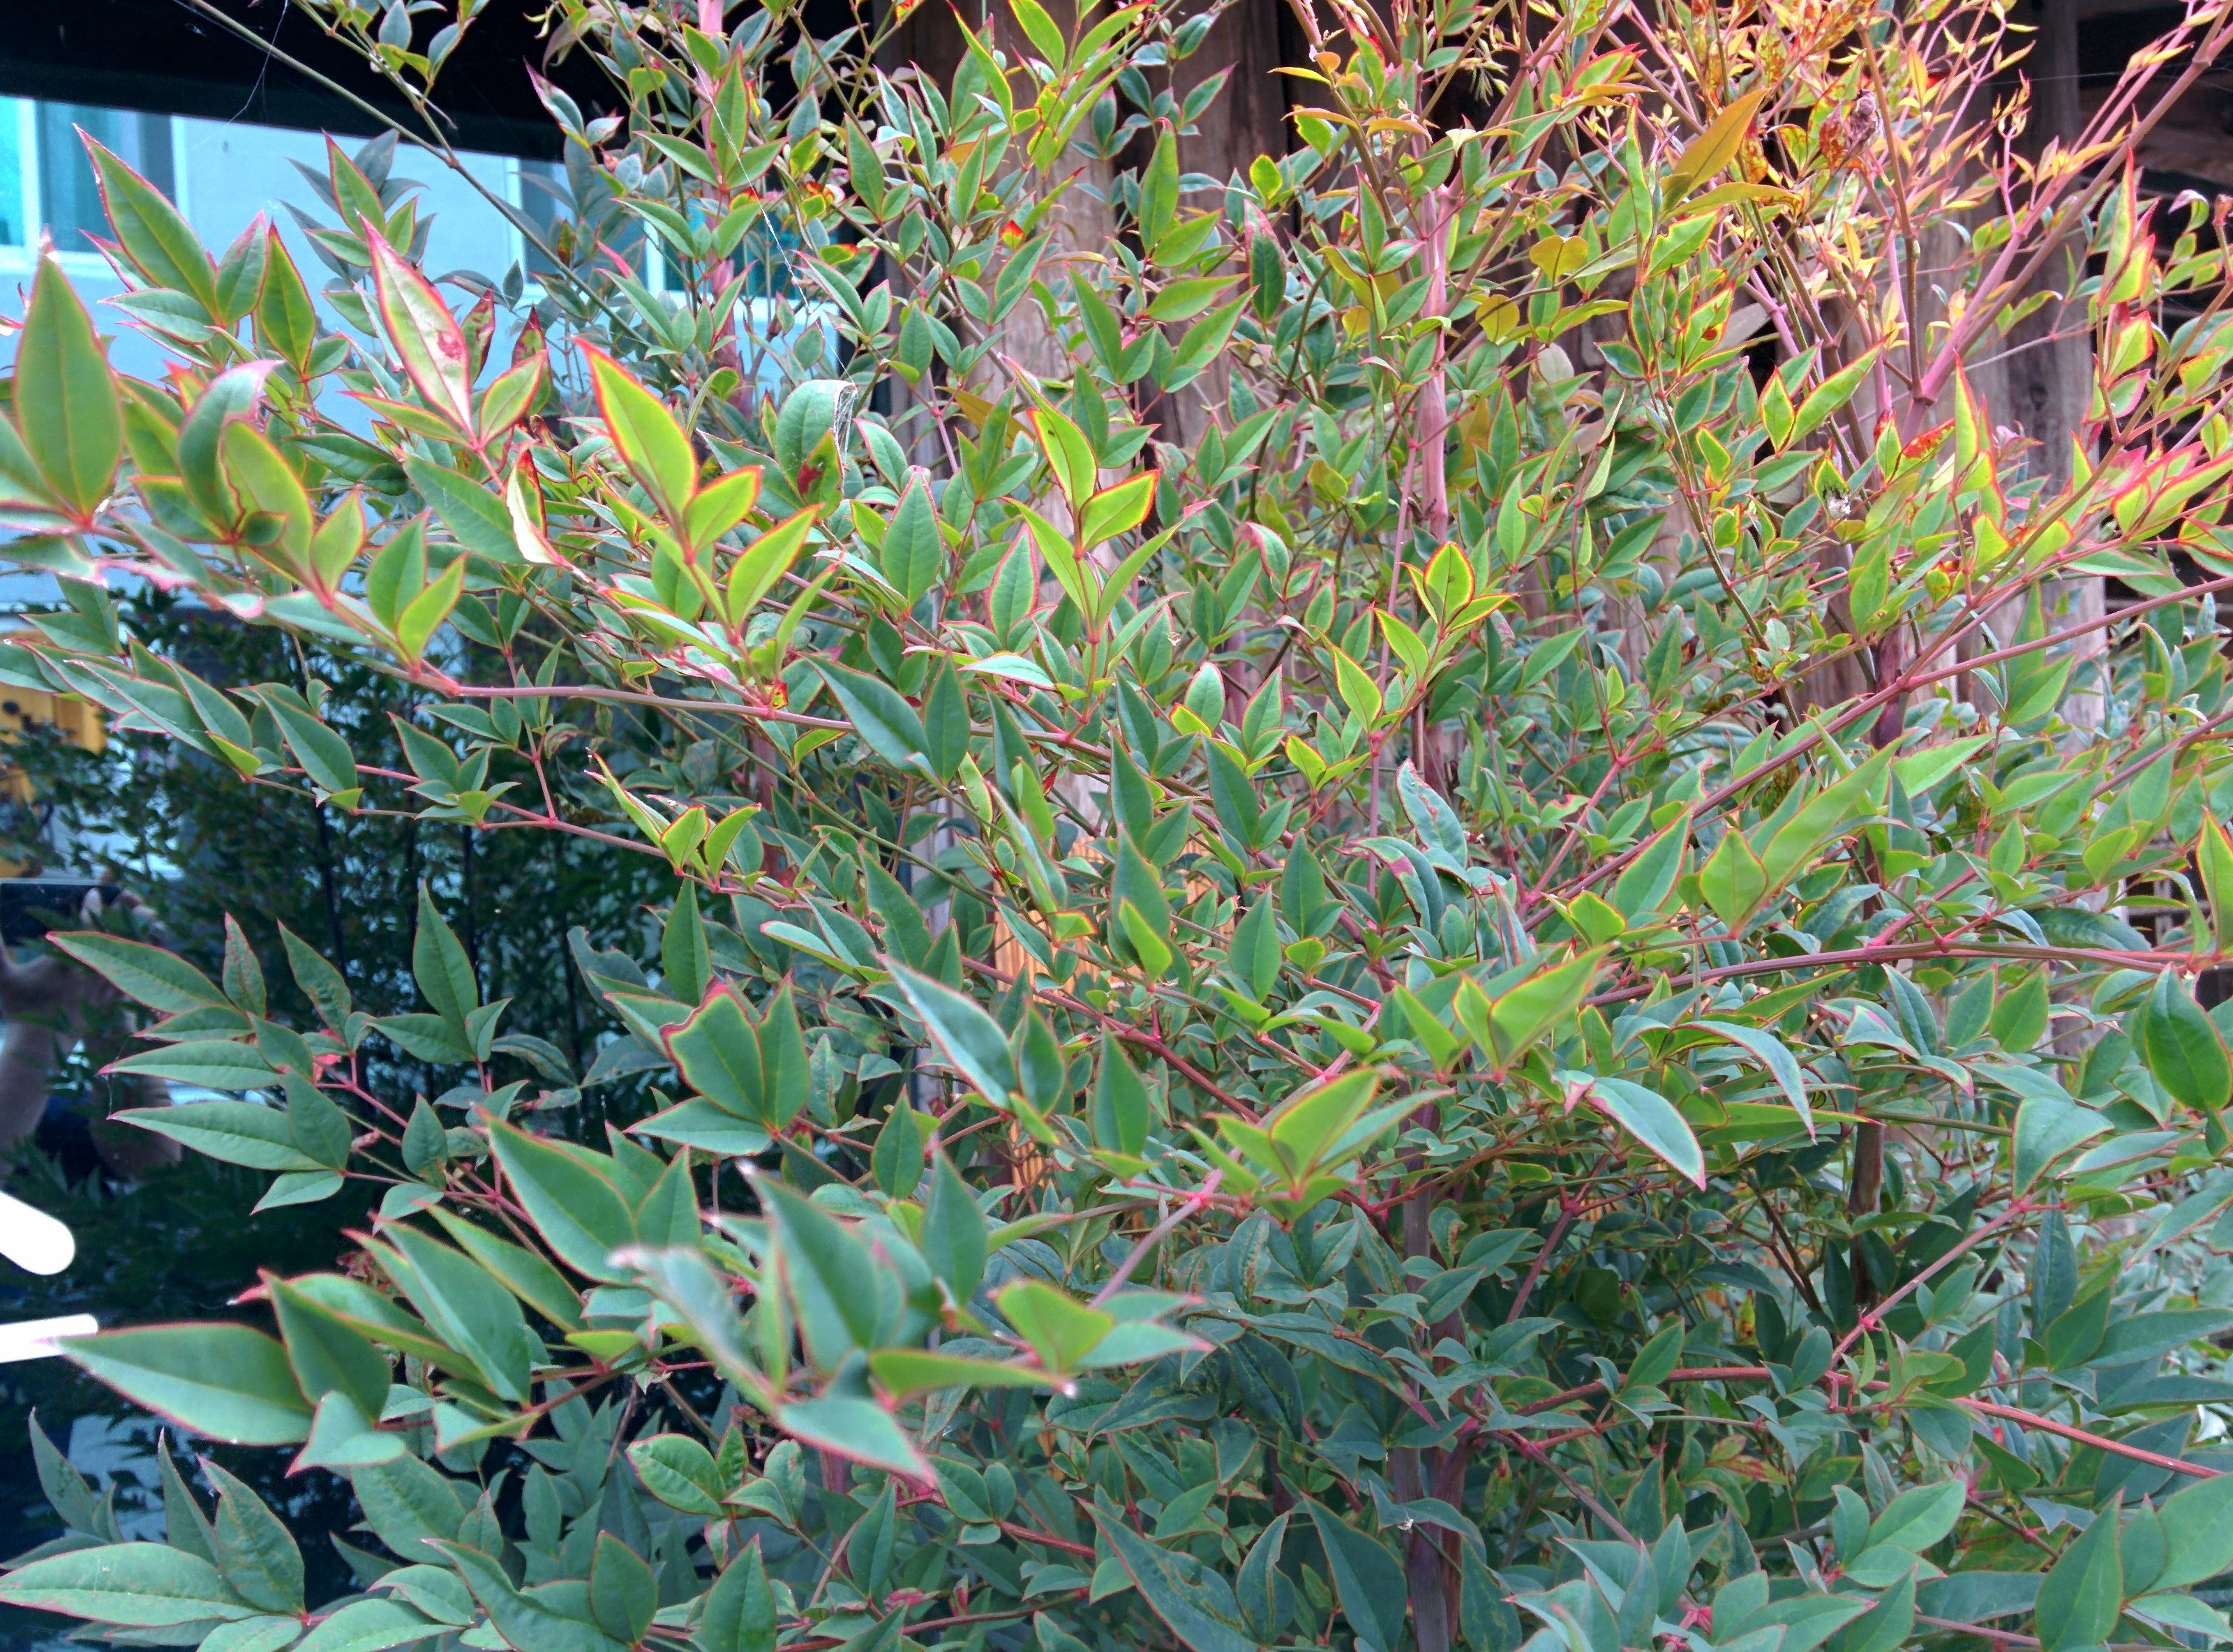 IMG_20150926_162154.jpg 적갈색 열매 송이, 붉은 테두리의 잎, 화분에 심은 정원수, 남천나무